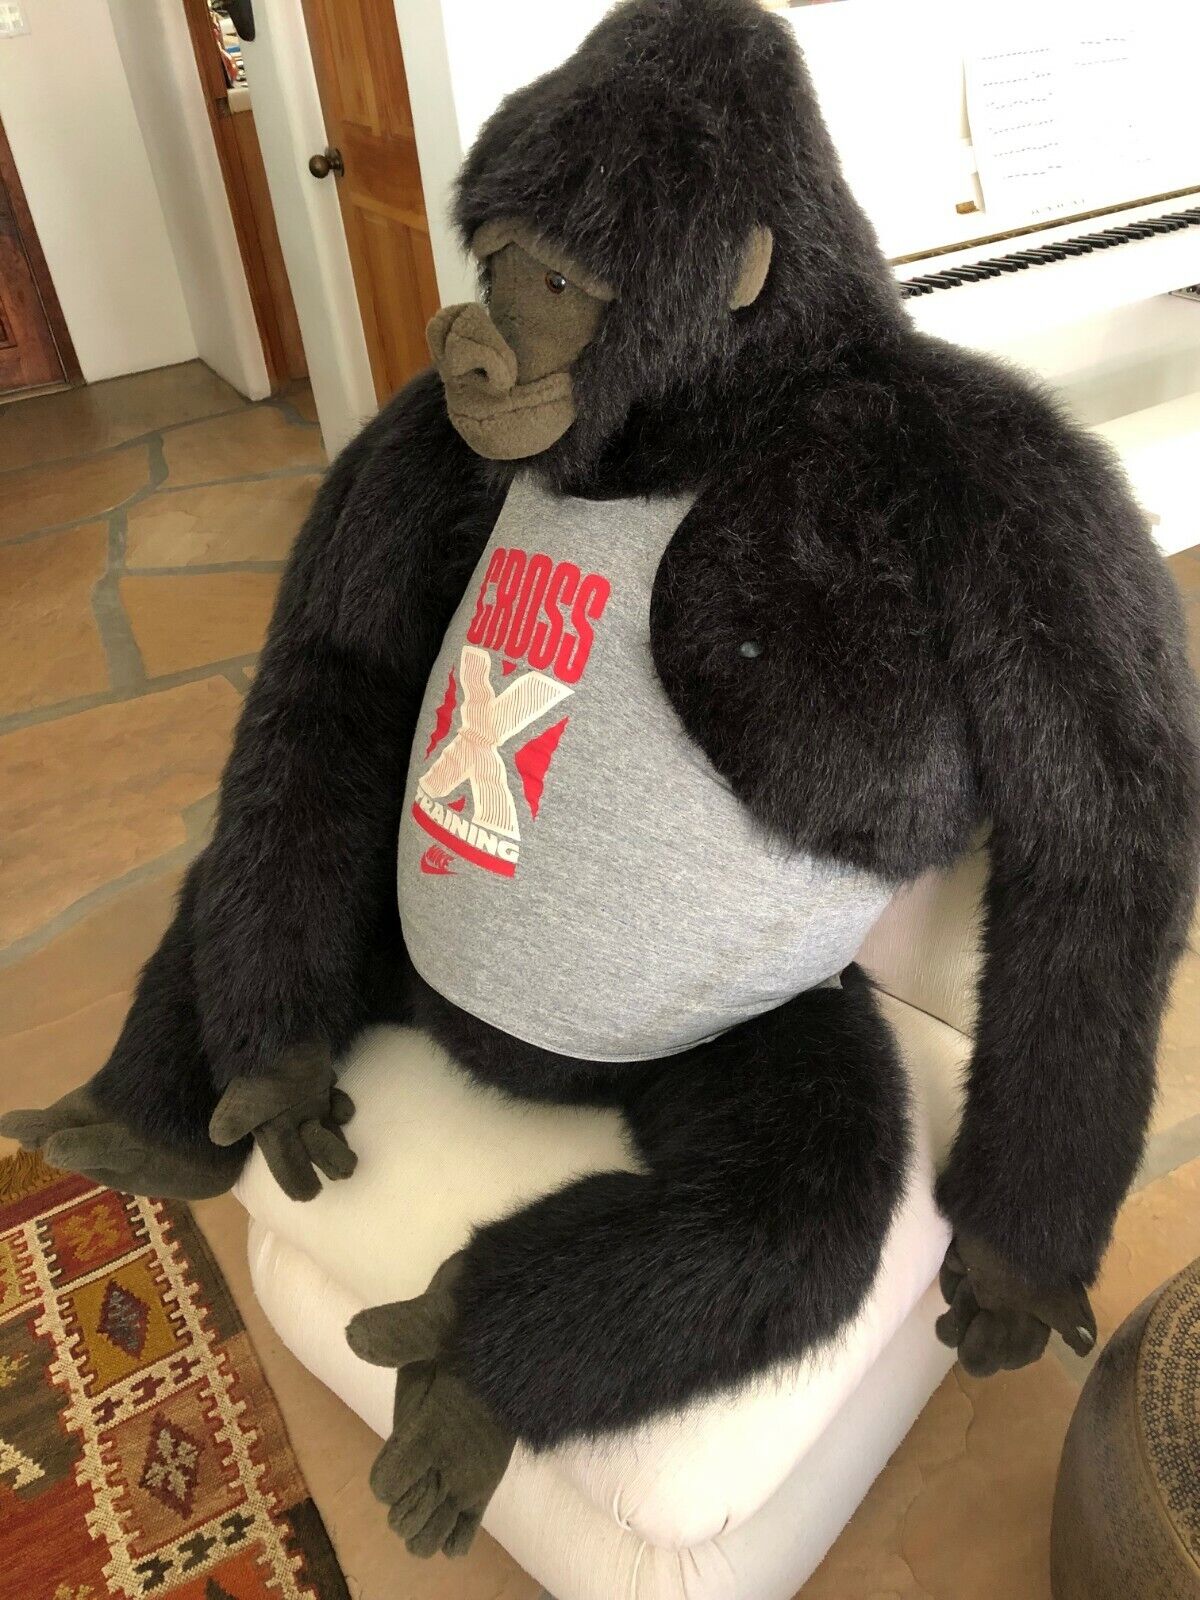 Koko Life Size 1986 Dakin Vintage Gorilla 50" Tall 89" Arm Span & T-shirt-a1-ok